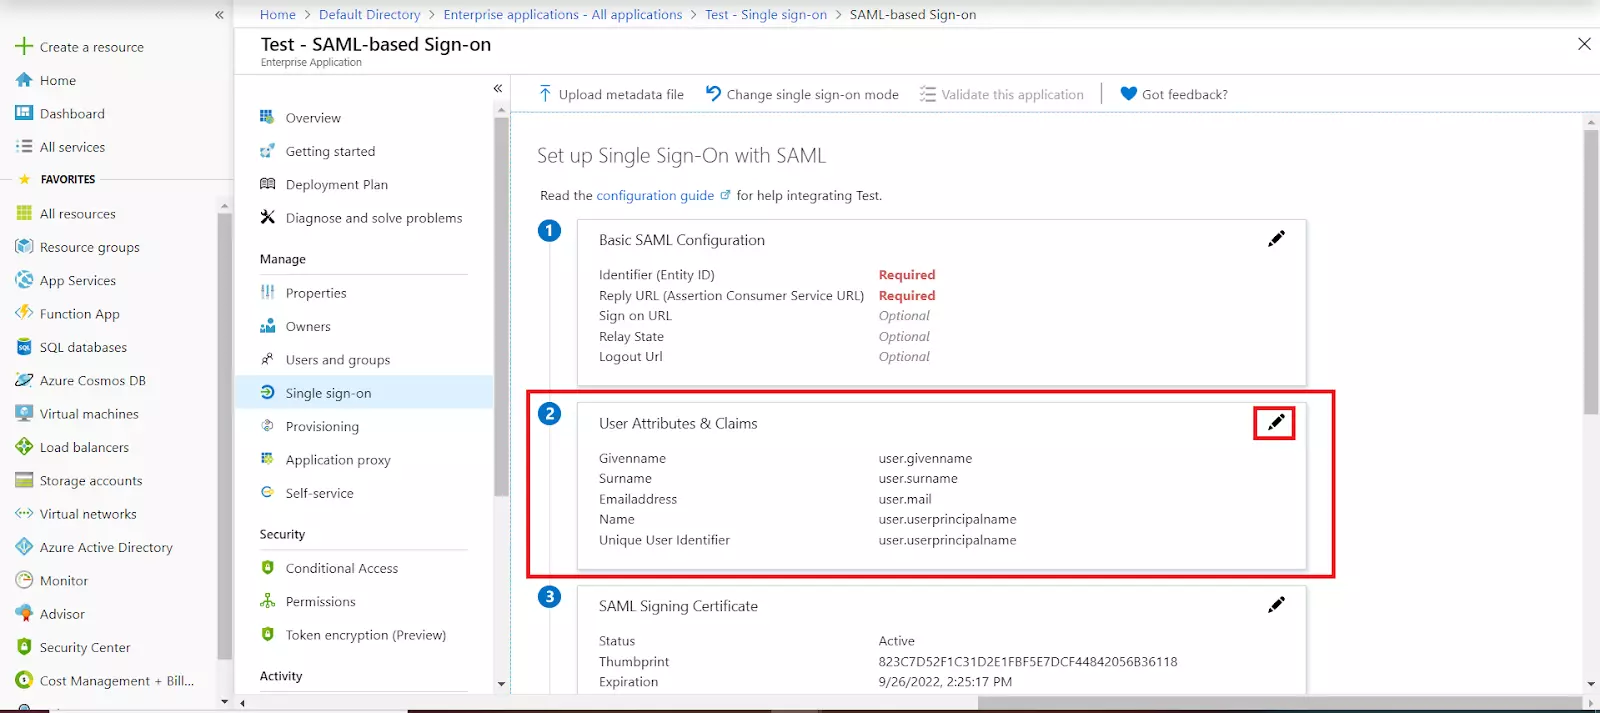 Azure AD SAML Single Sign-On SSO into Joomla, Azure Active Directory SSO- Azure AD User attributes